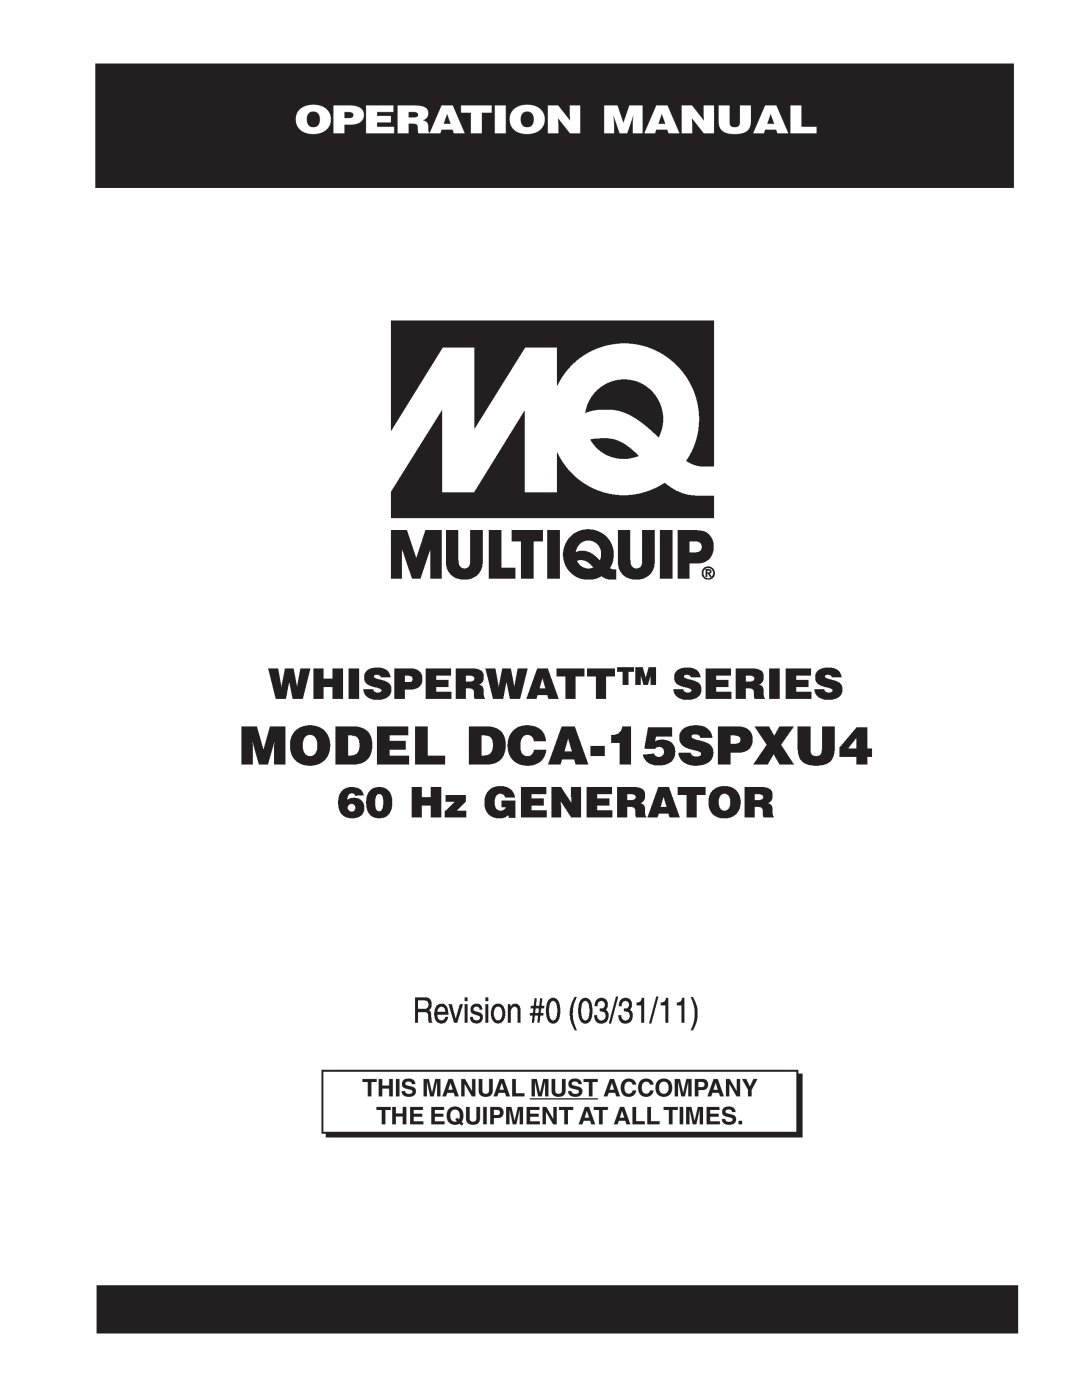 Multiquip operation manual MODEL DCA-15SPXU4, Whisperwatttm Series, Hz GENERATOR, Revision #0 03/31/11 